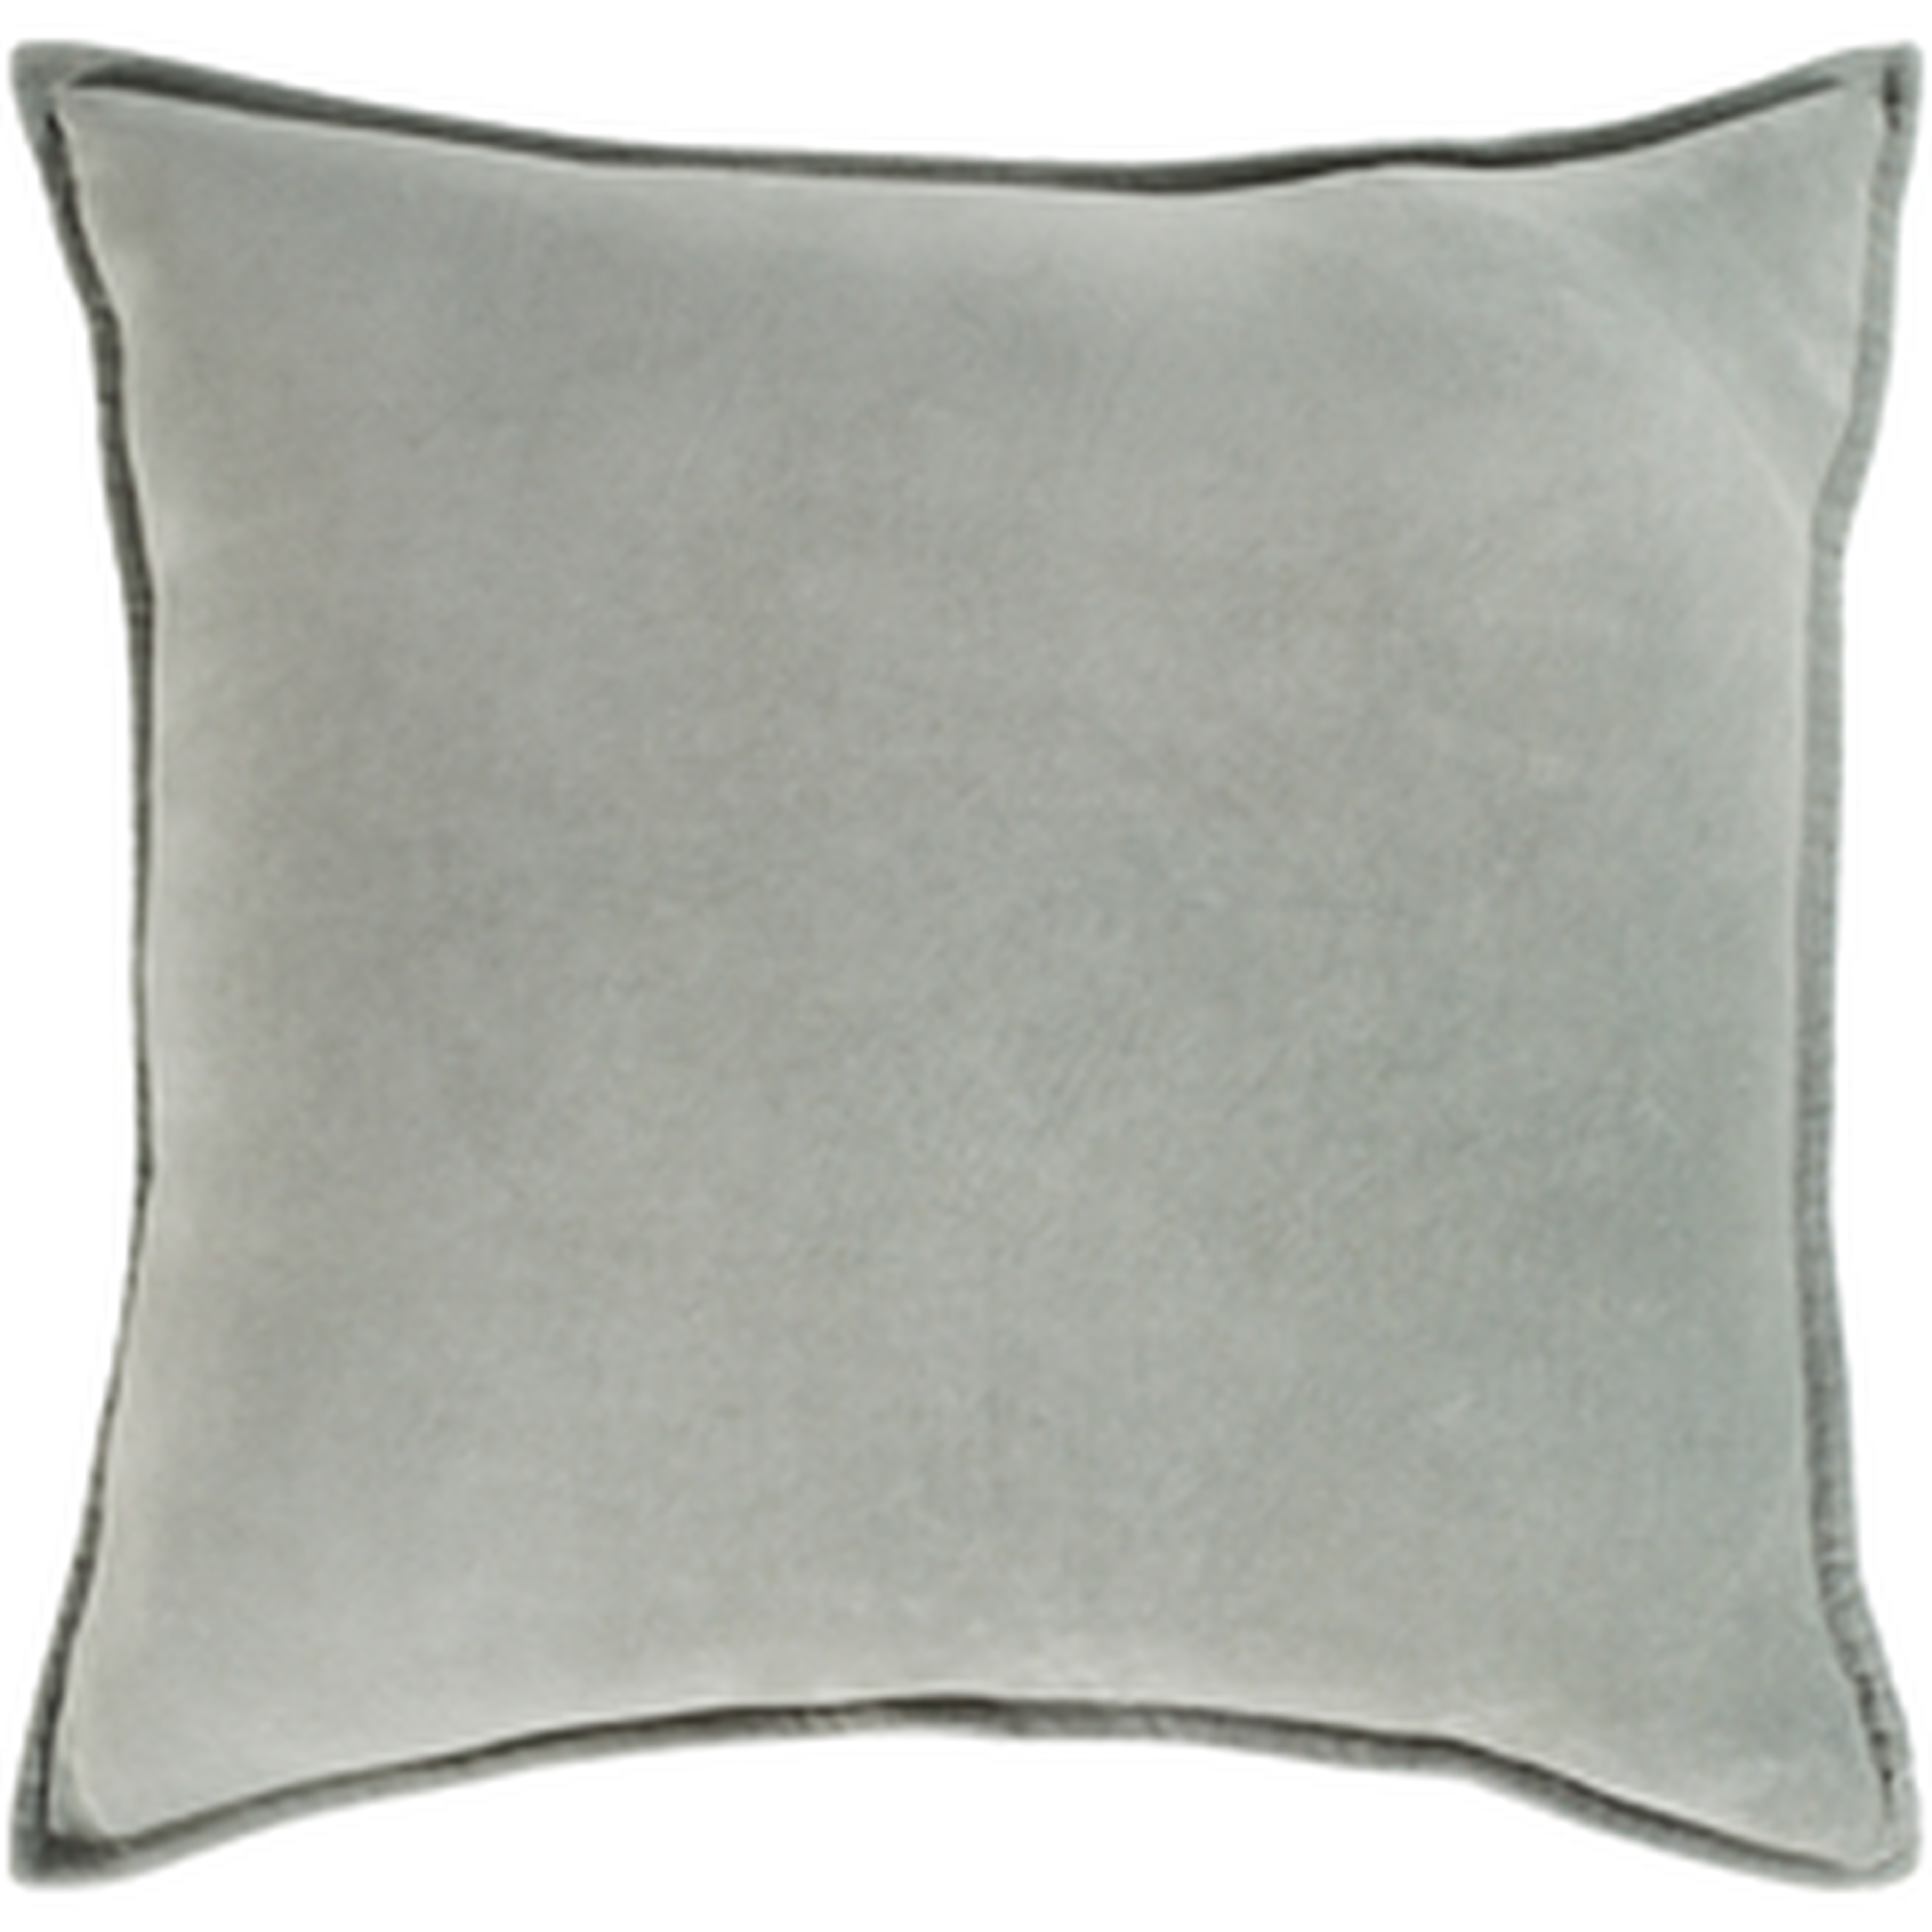 Cotton Velvet : CV-021, Pillow Shell with Down Insert - Surya